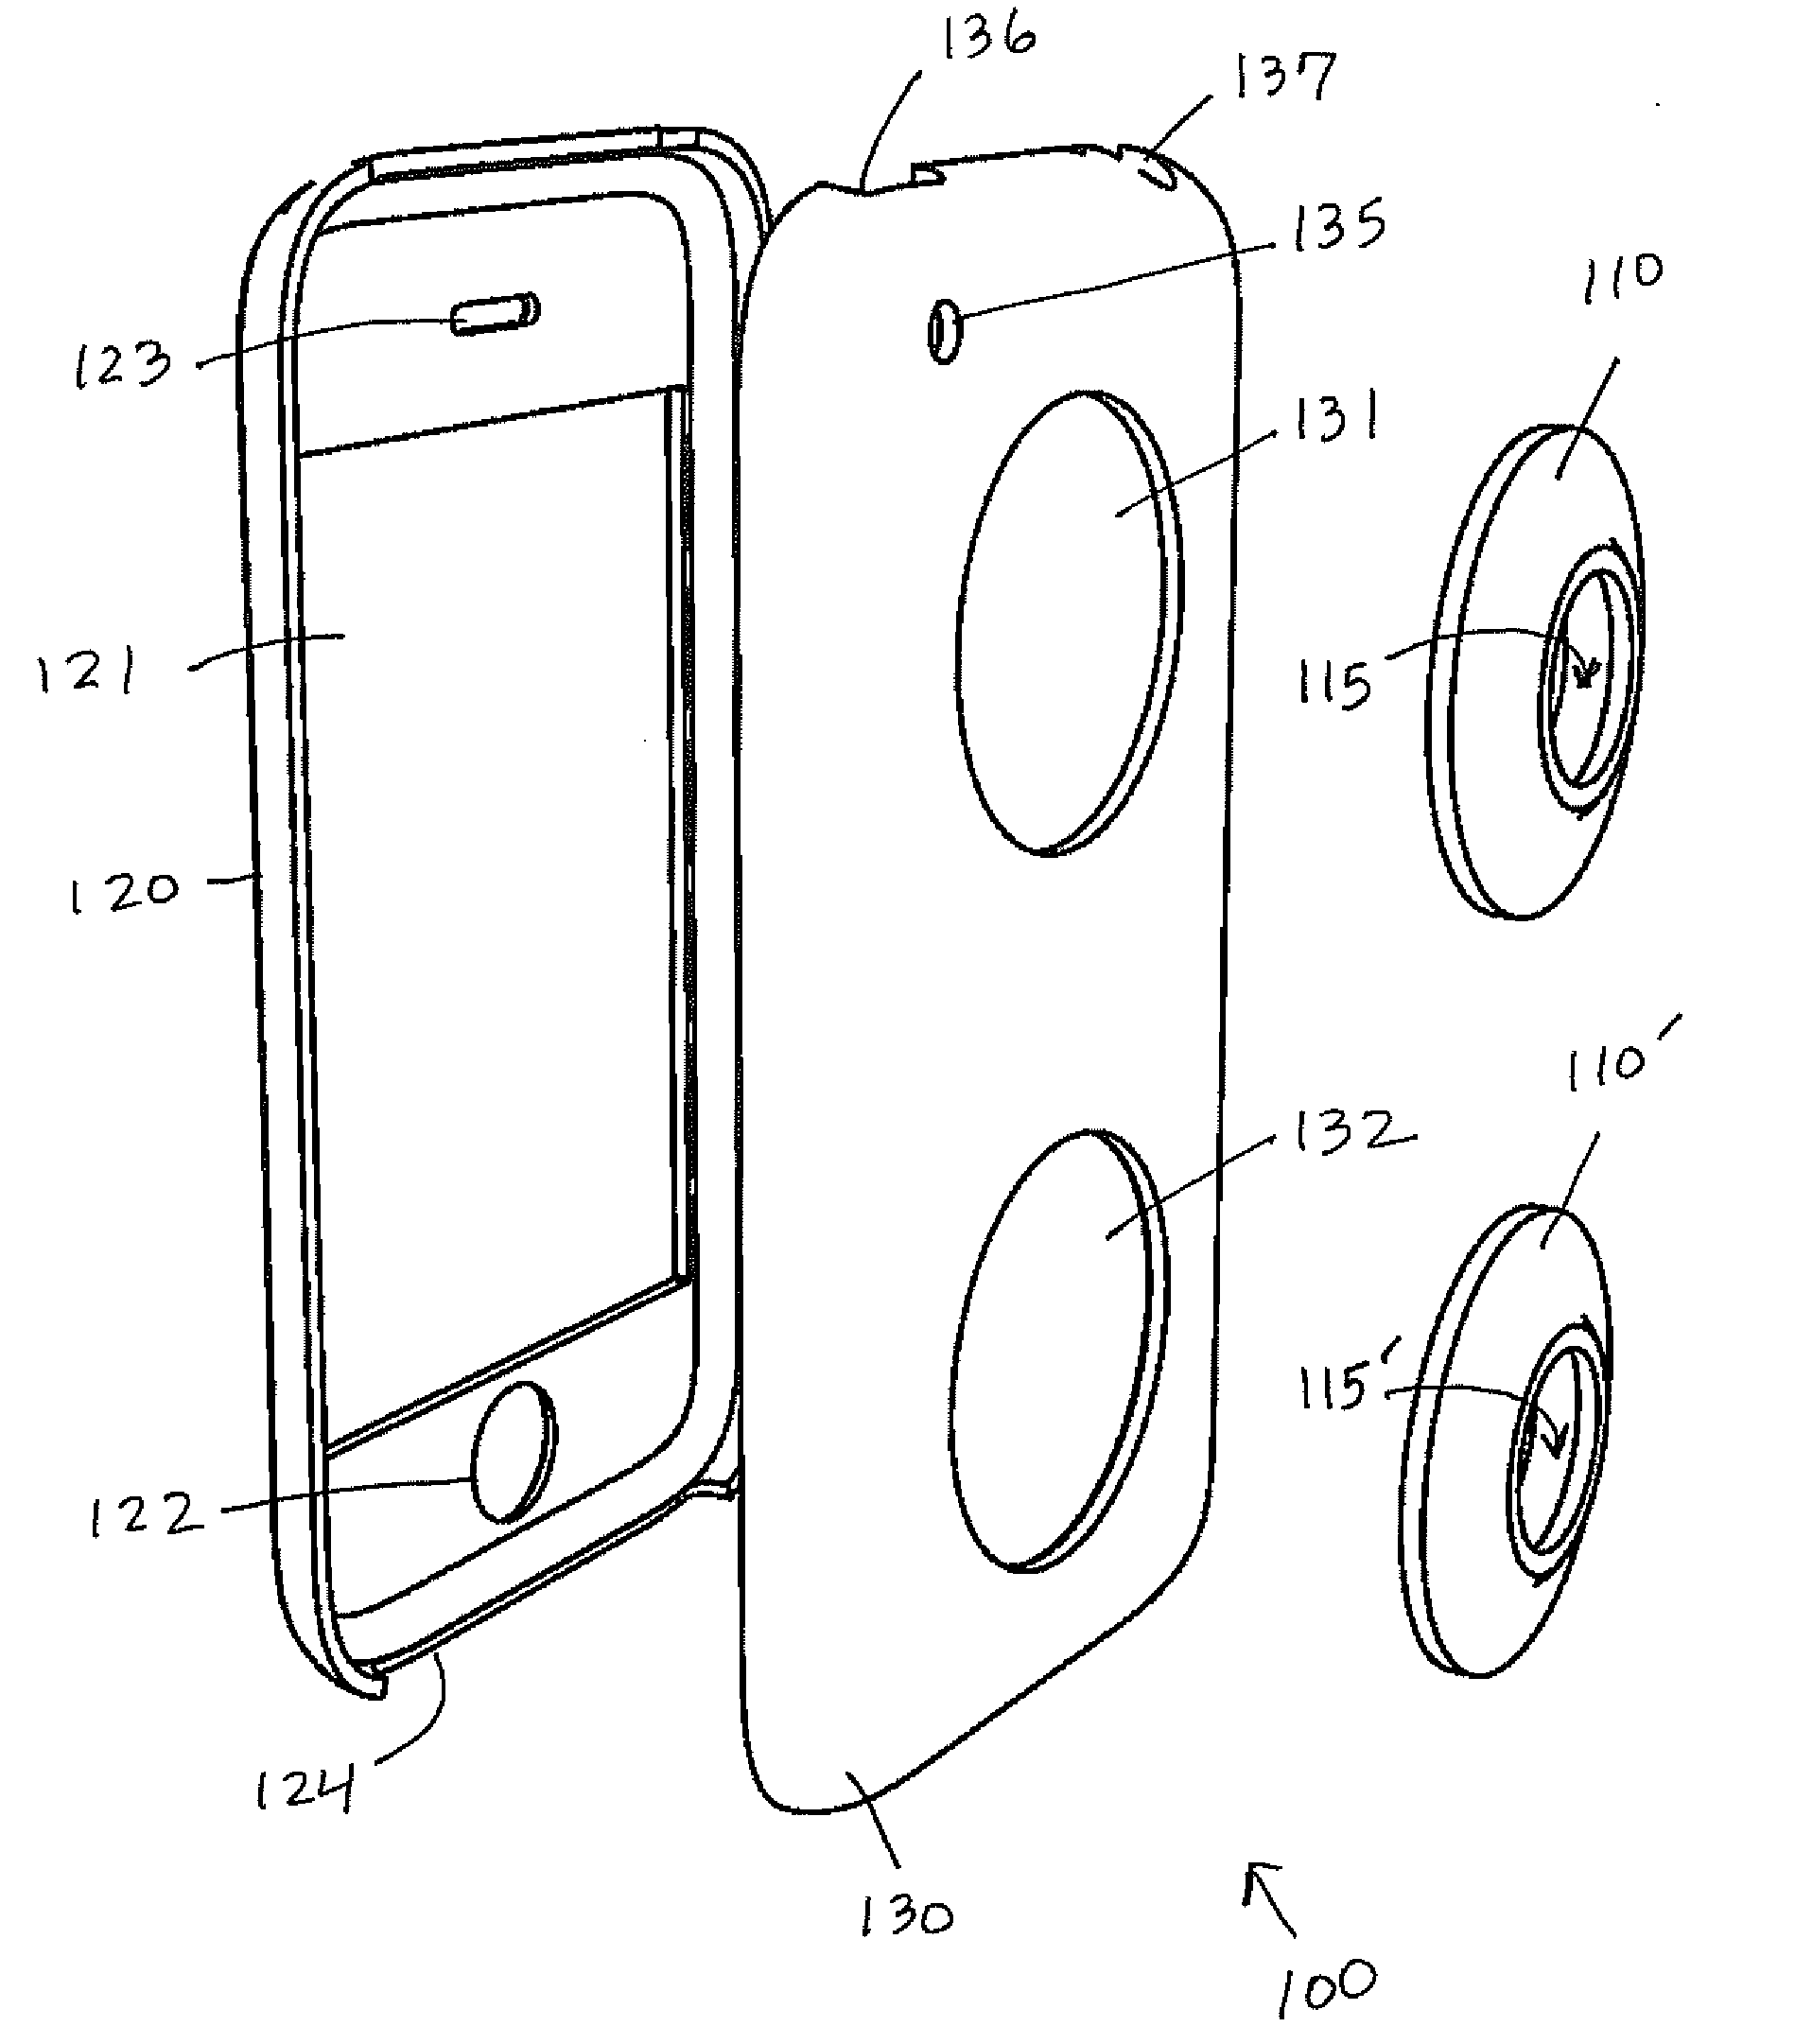 Multi-function case for portable digital media device